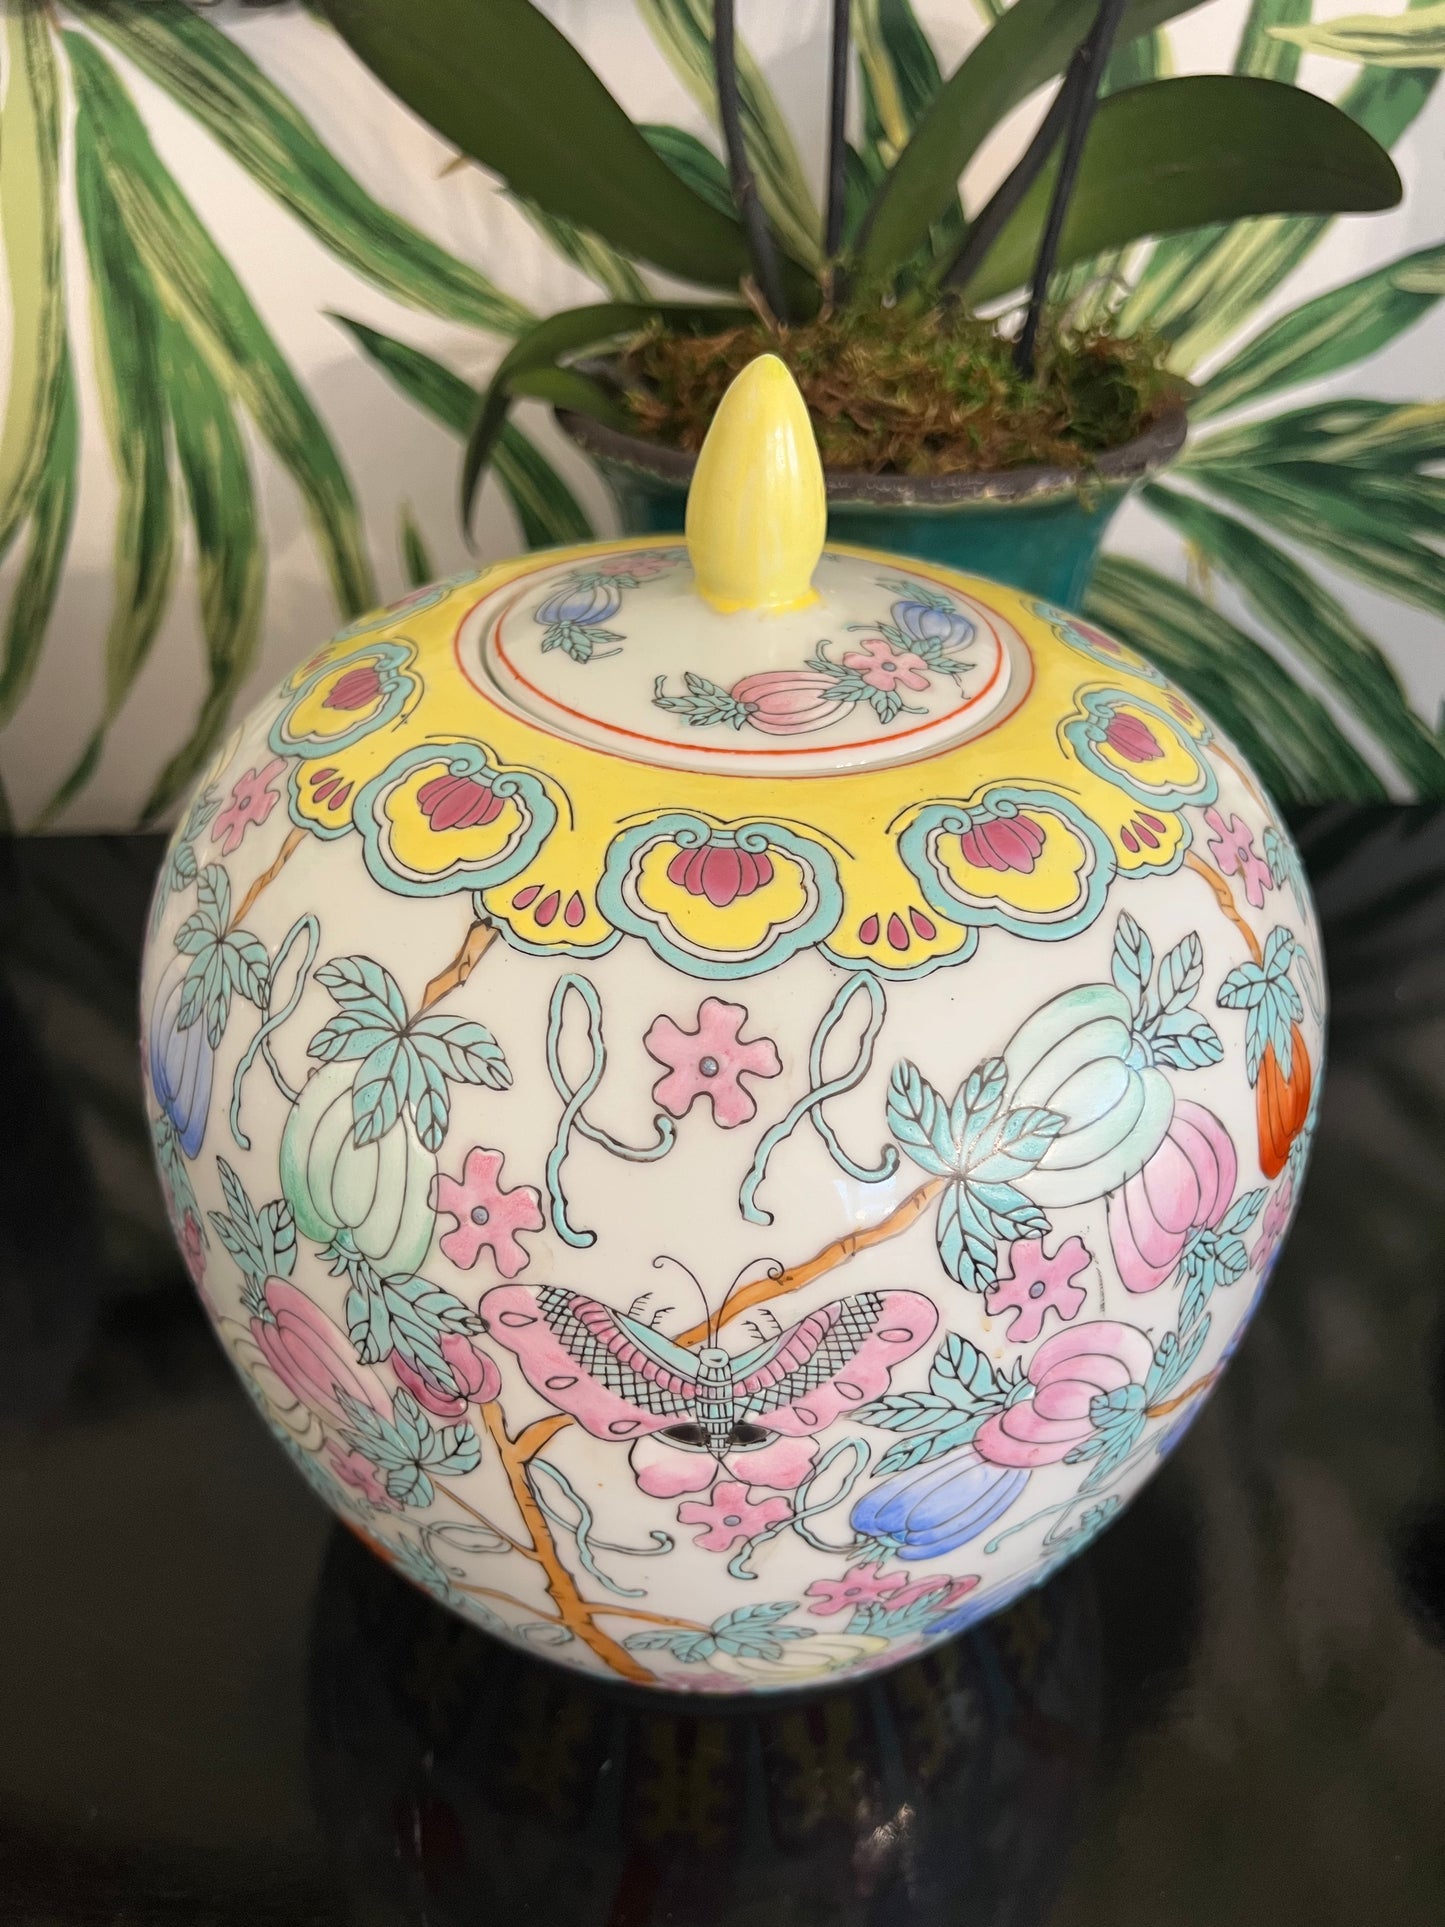 Vintage Butterfly Melon Jar, 10” tall - Pristine!